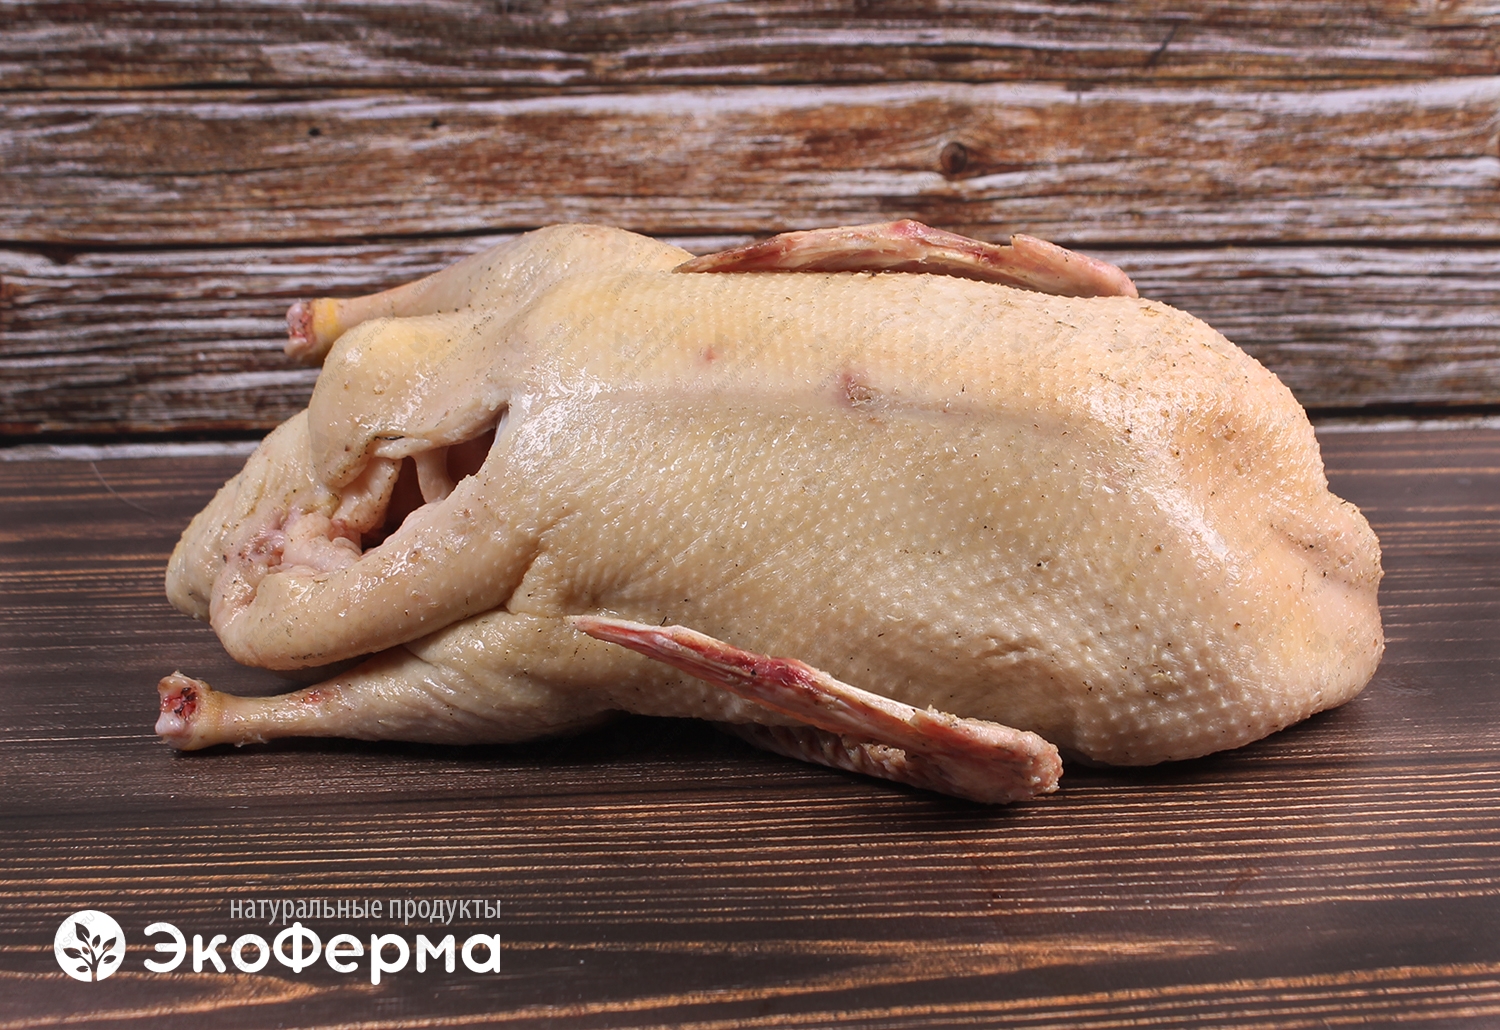 Купить мясо утки, продажа мяса домашних уток - ЭкоФерма